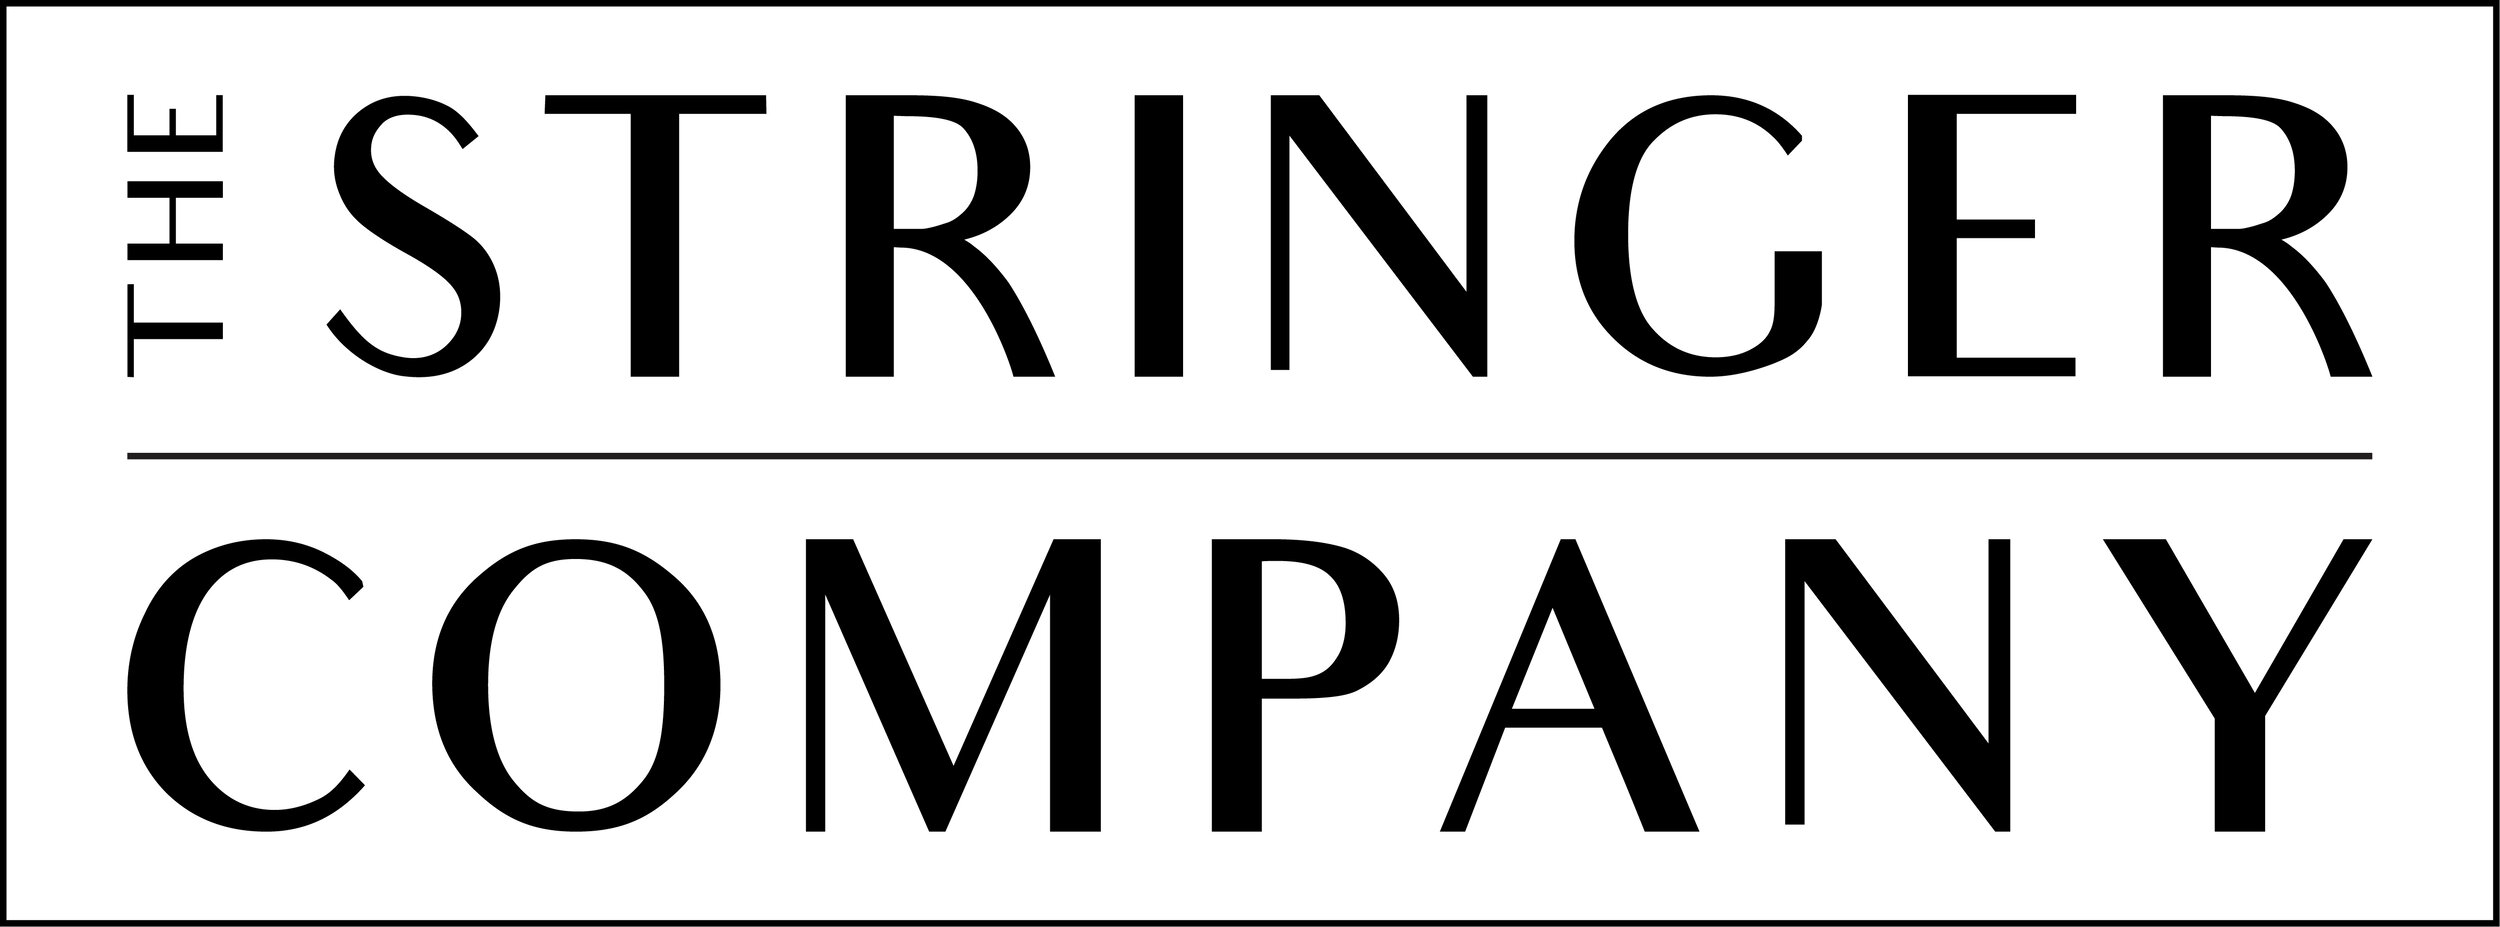 The Stringer Company.jpg